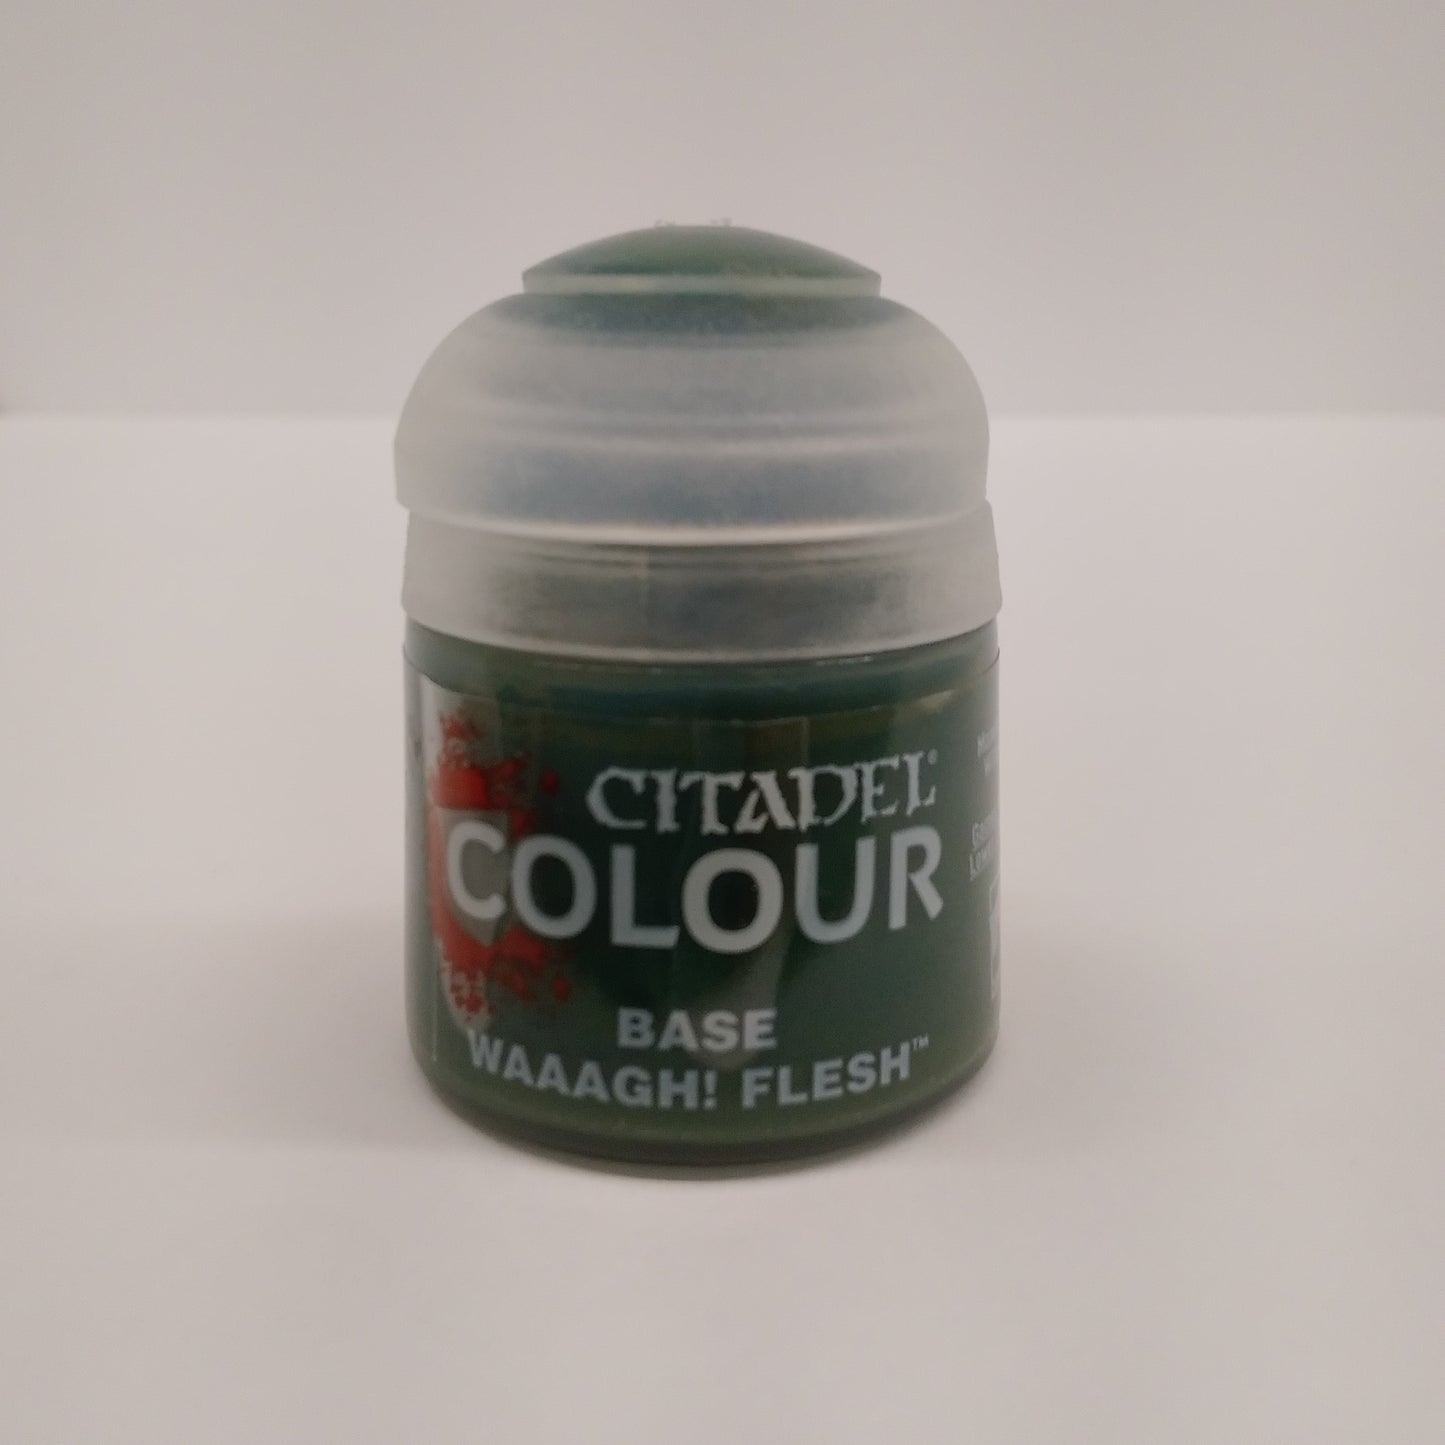 Citadel Colour - Waaagh! Flesh